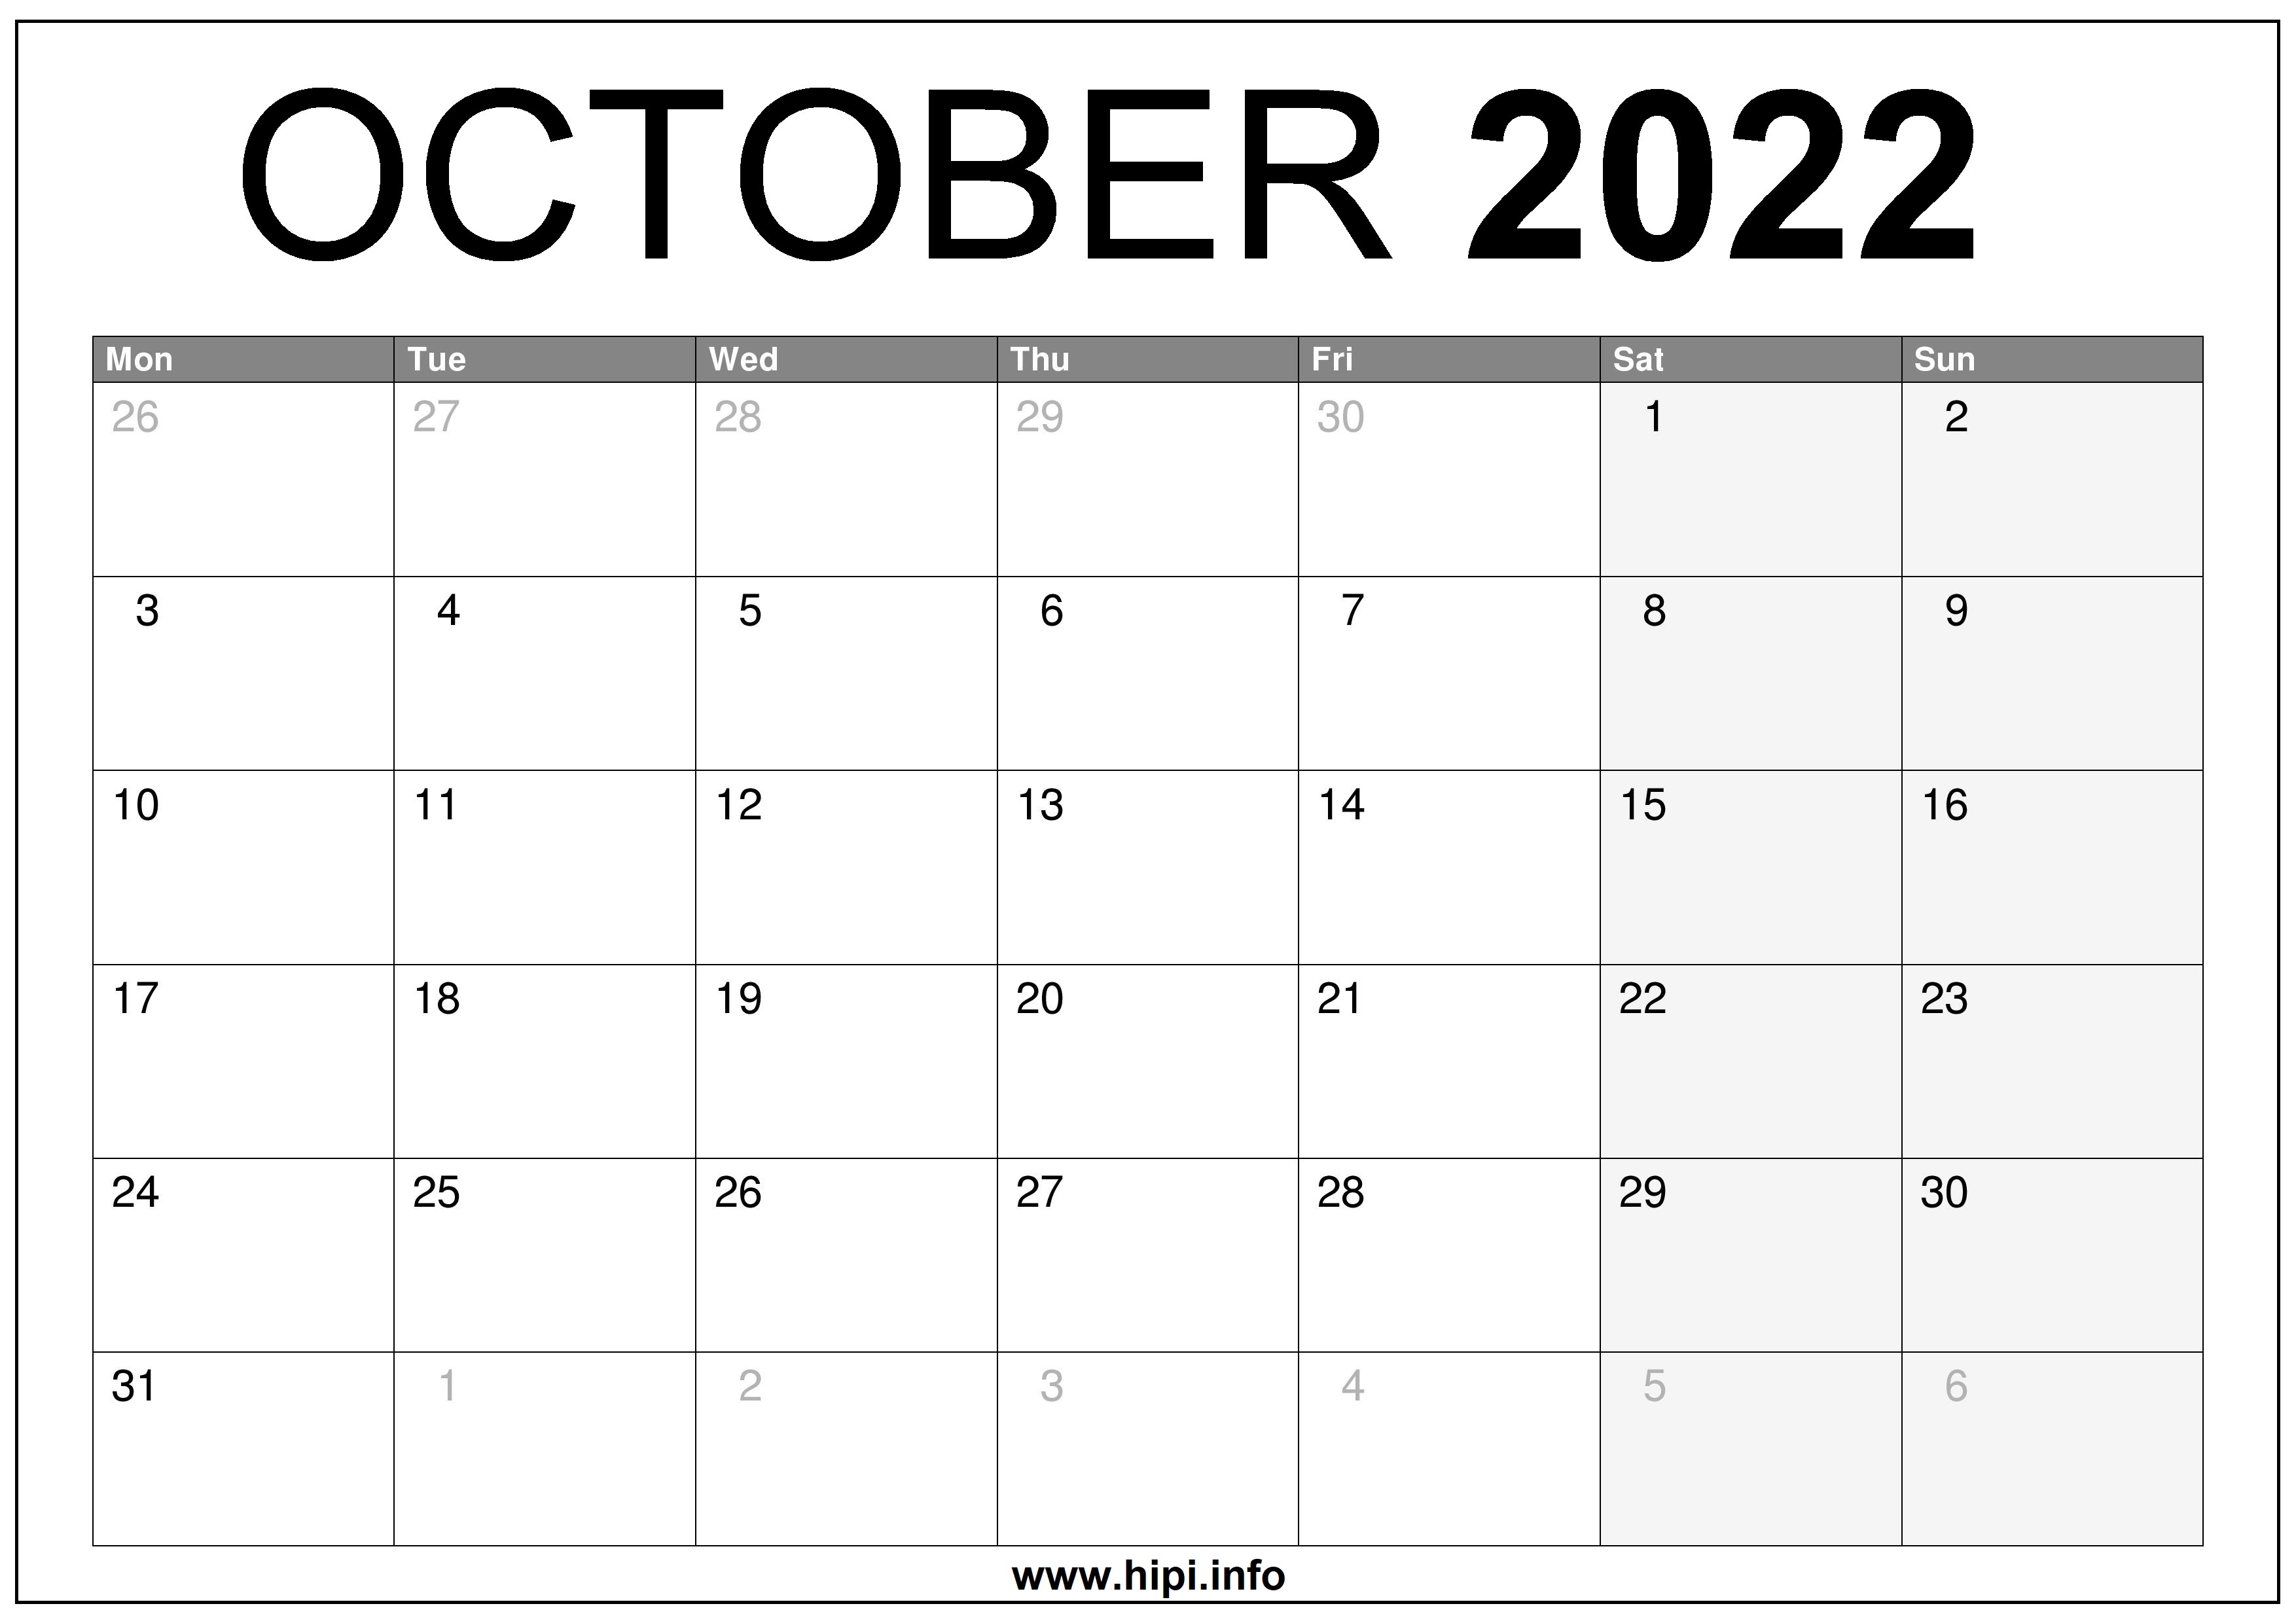 October 2022 Calendar Images October 2022 Uk Calendar Printable Free - Hipi.info | Calendars Printable  Free